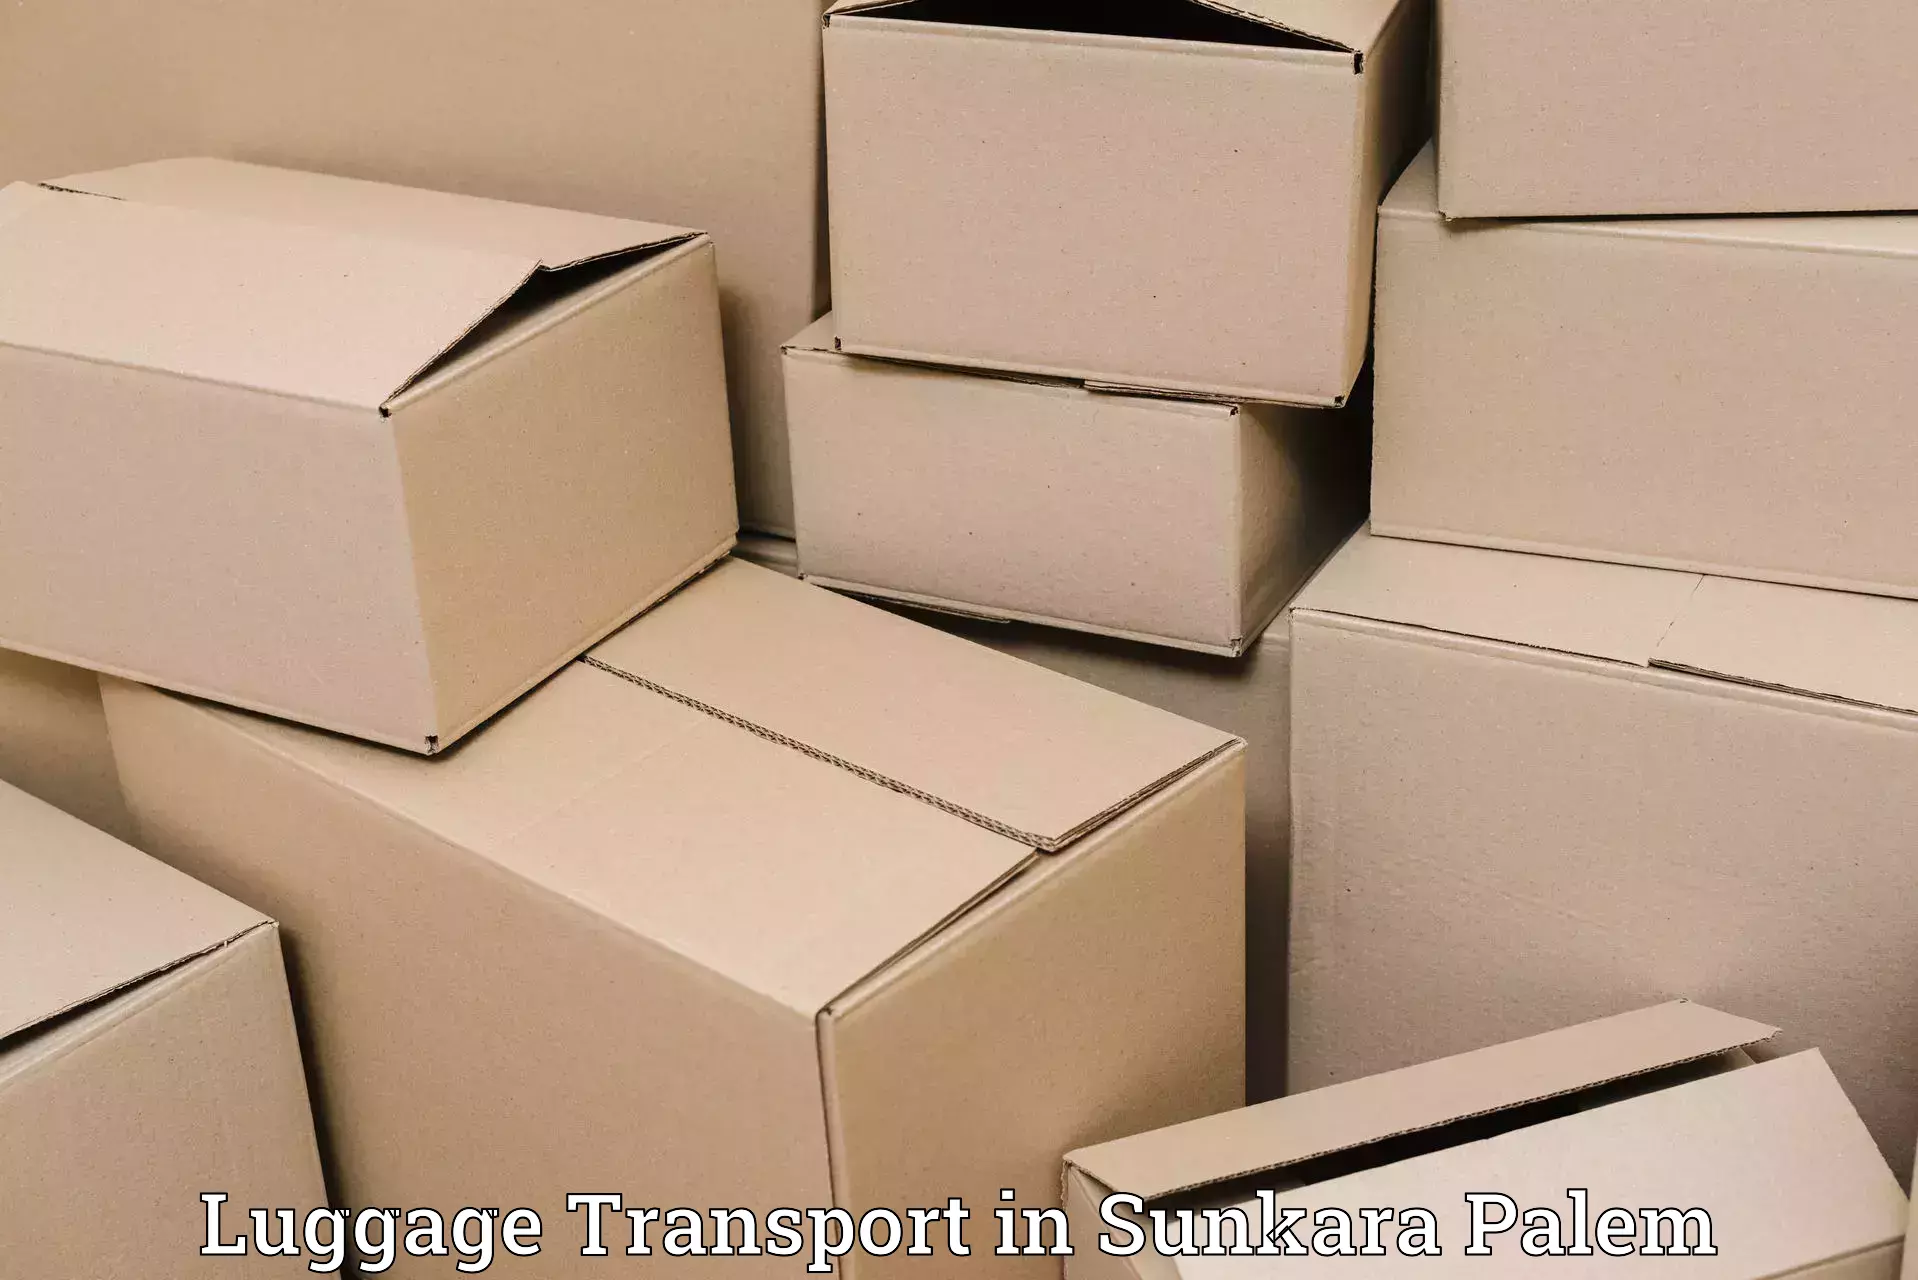 Luggage transport operations in Sunkara Palem